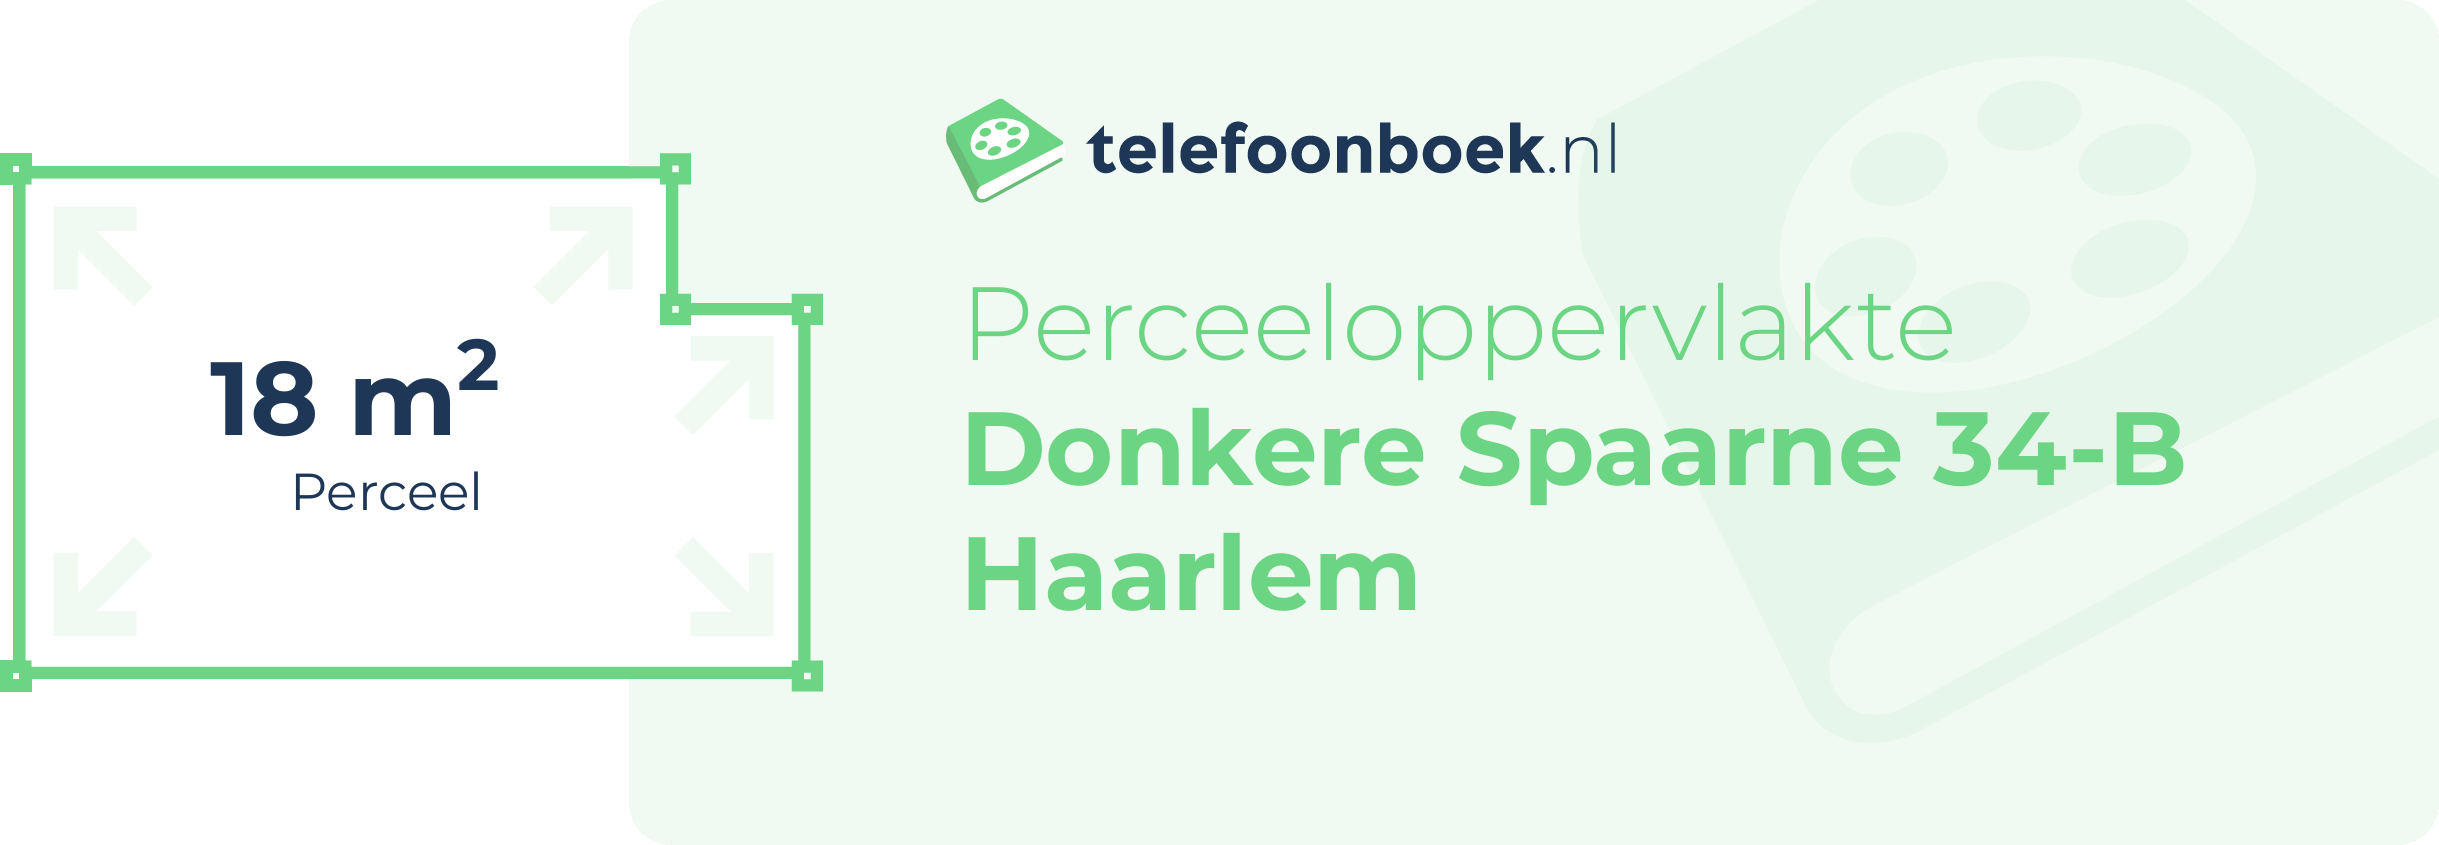 Perceeloppervlakte Donkere Spaarne 34-B Haarlem